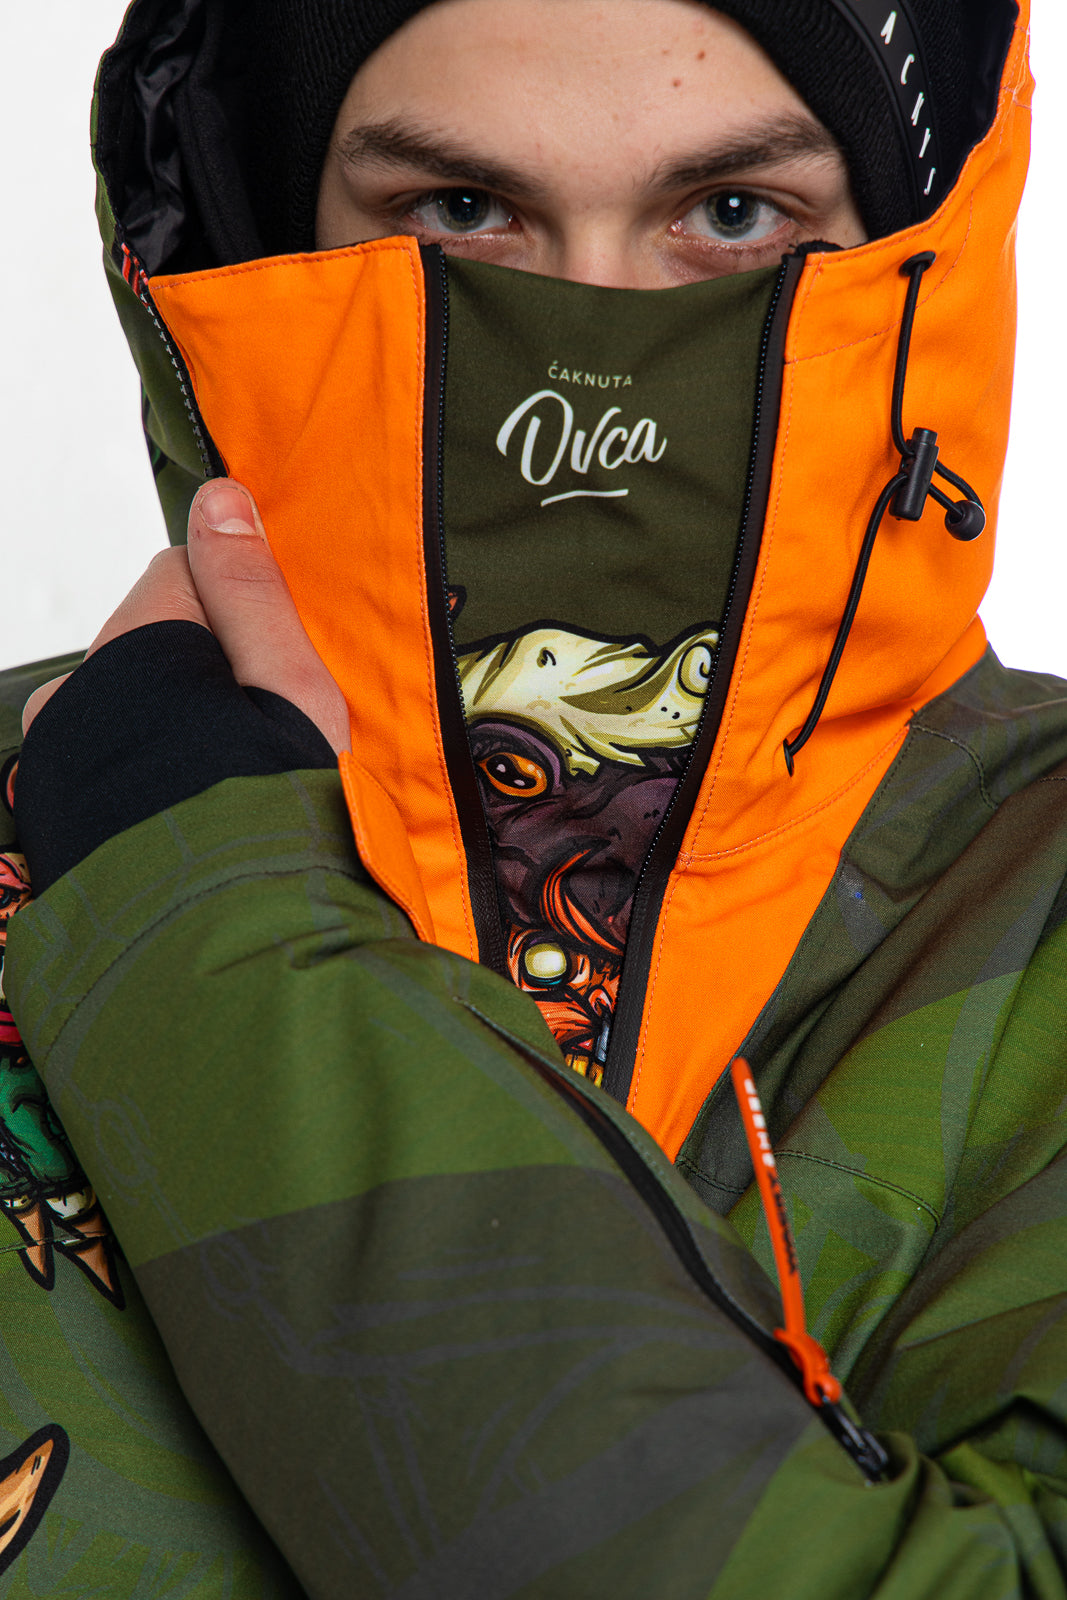 M's Ovcar Ski Jacket